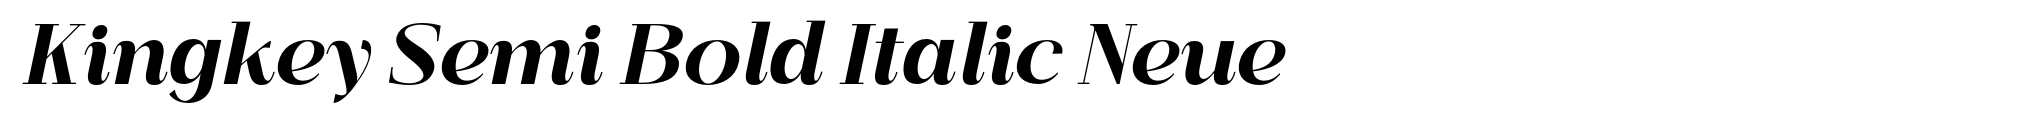 Kingkey Semi Bold Italic Neue image